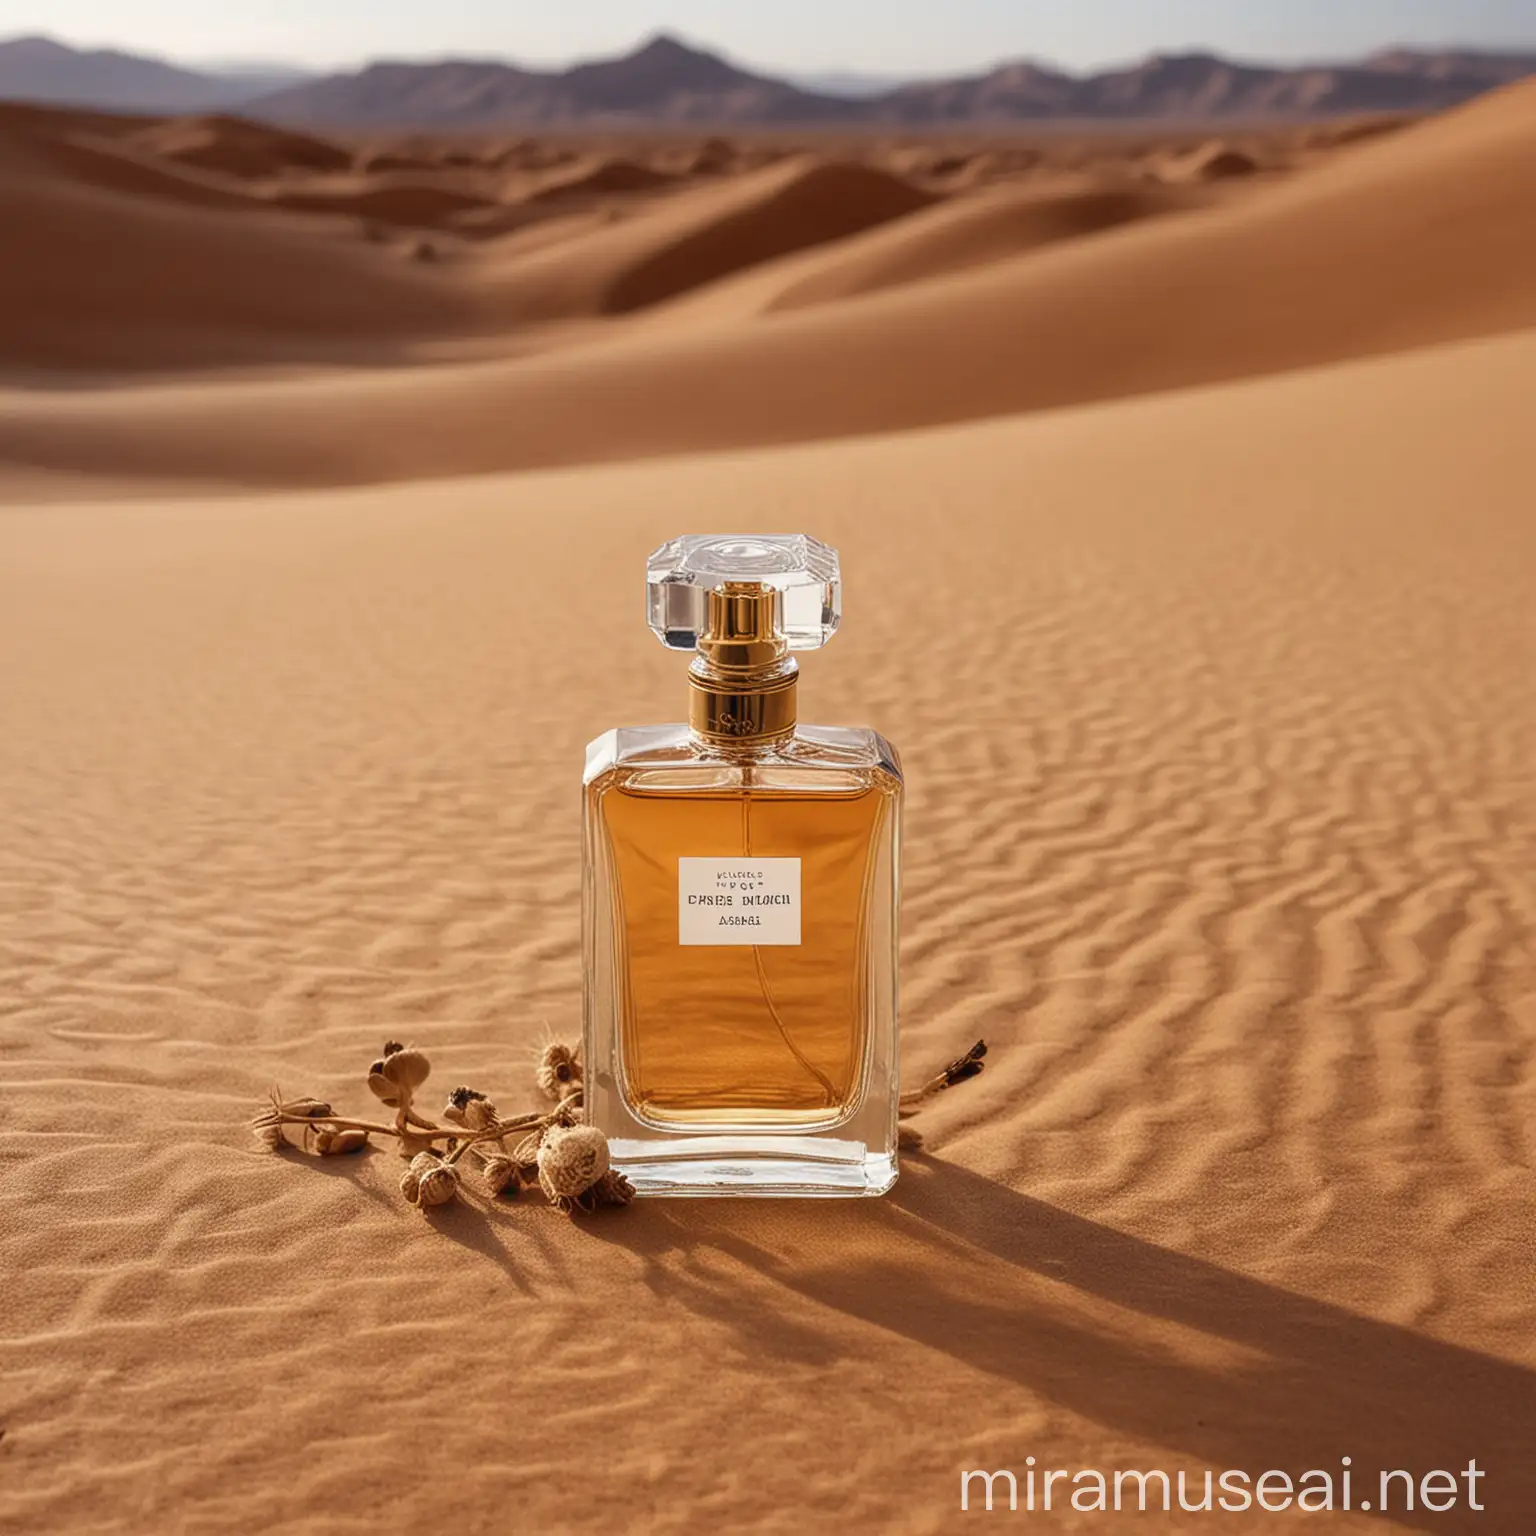 Sensory Delight Aromatic Blooms amidst Desert Sands